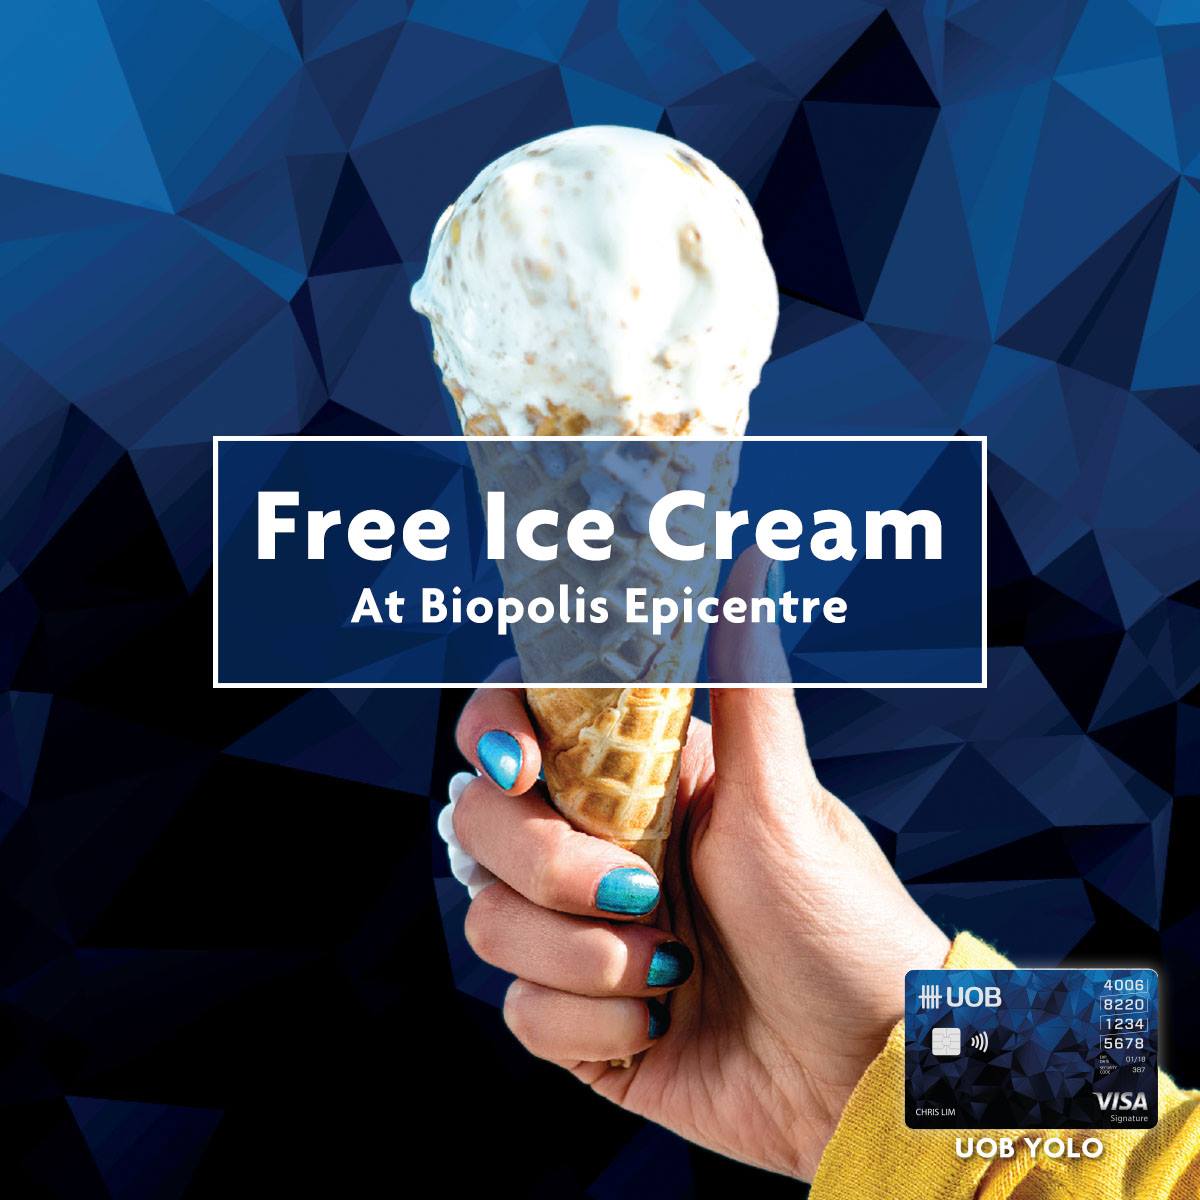 UOB Singapore Free Ice Cream at Biopolis Epicentre Roadshow Promotion 7 Sep 2016